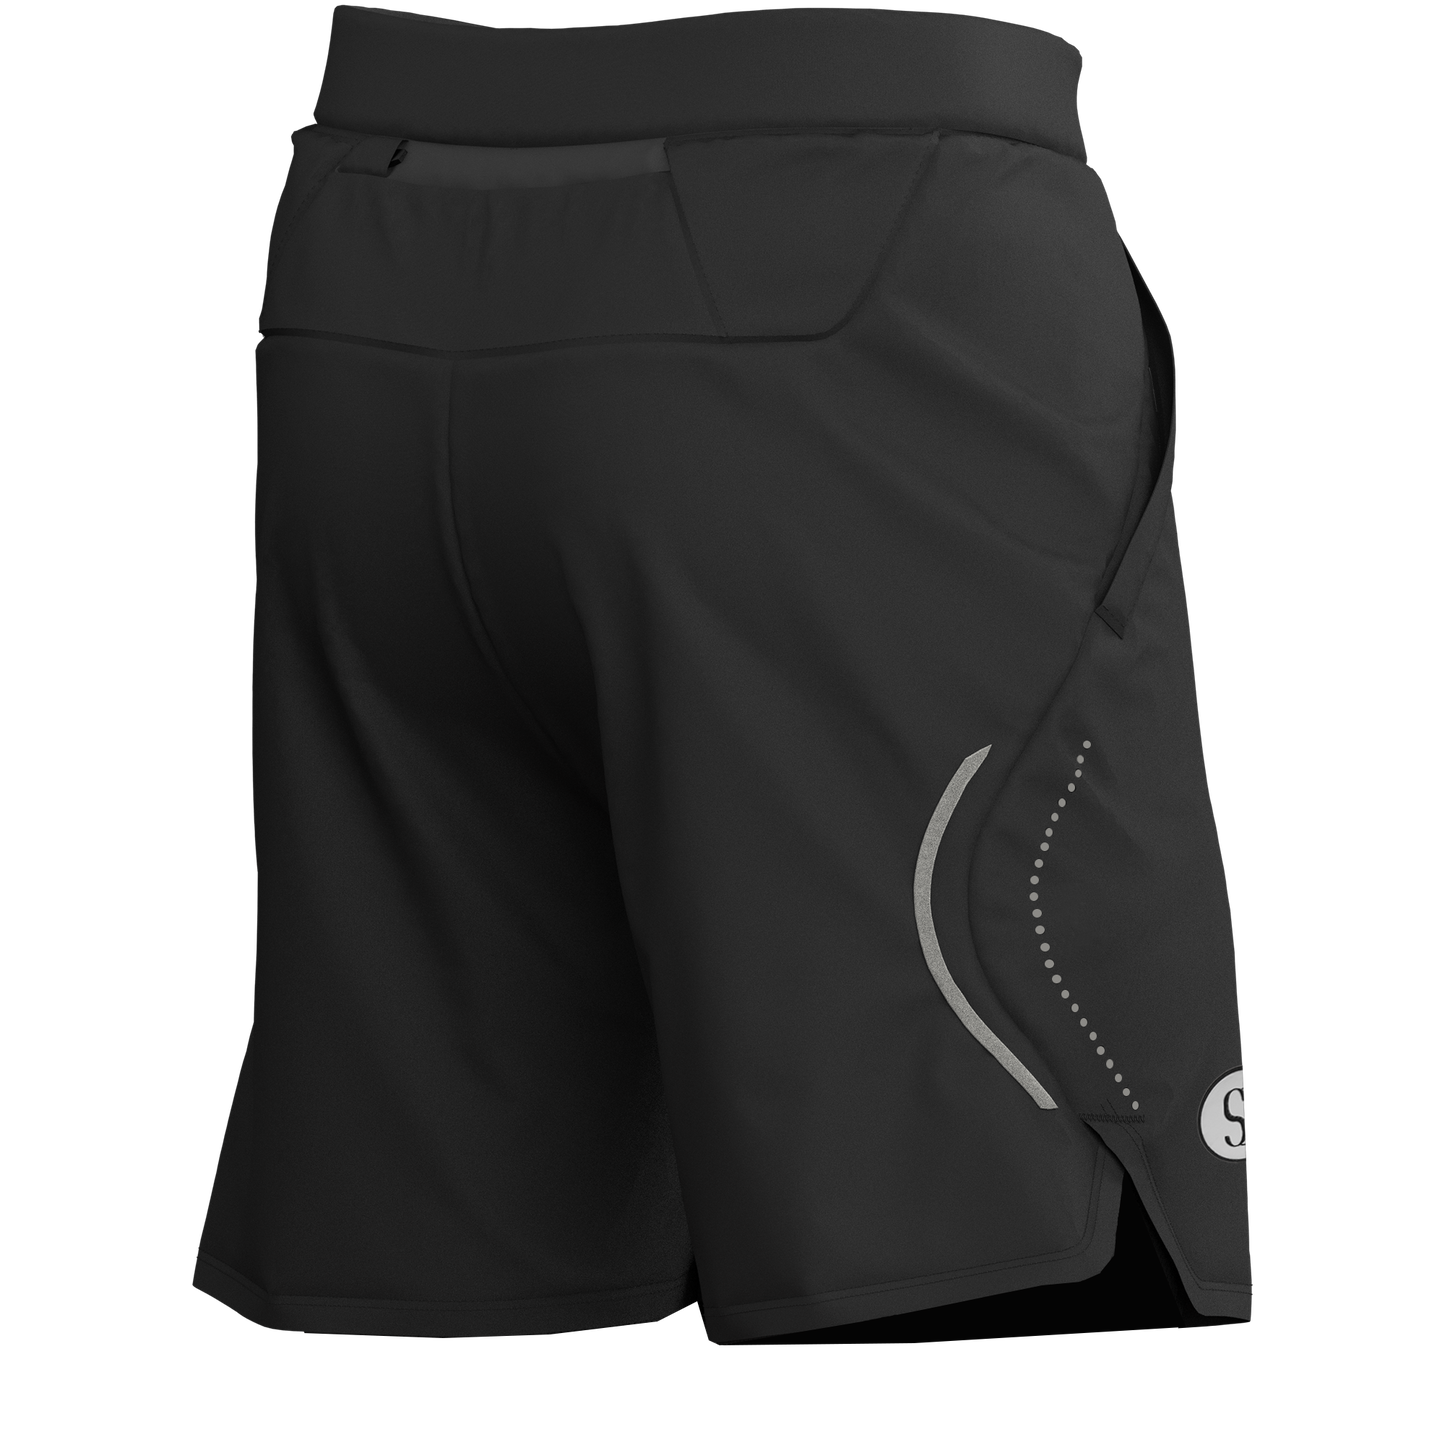 Men's Black Sports Shorts for Running & Gym